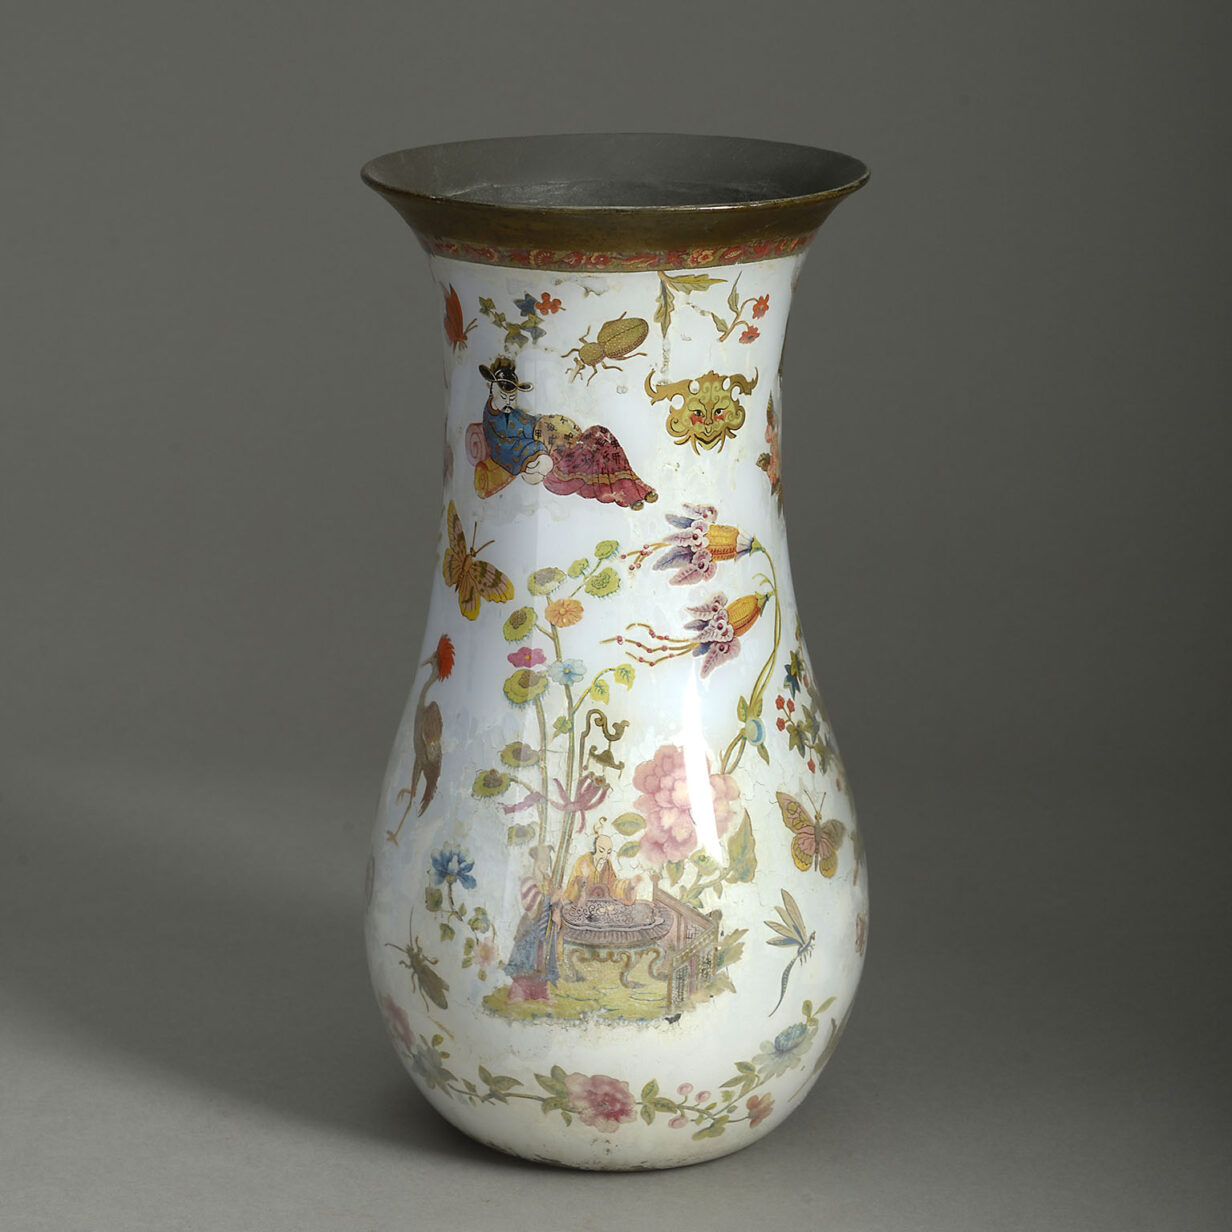 19th Century Decalcomania Vase